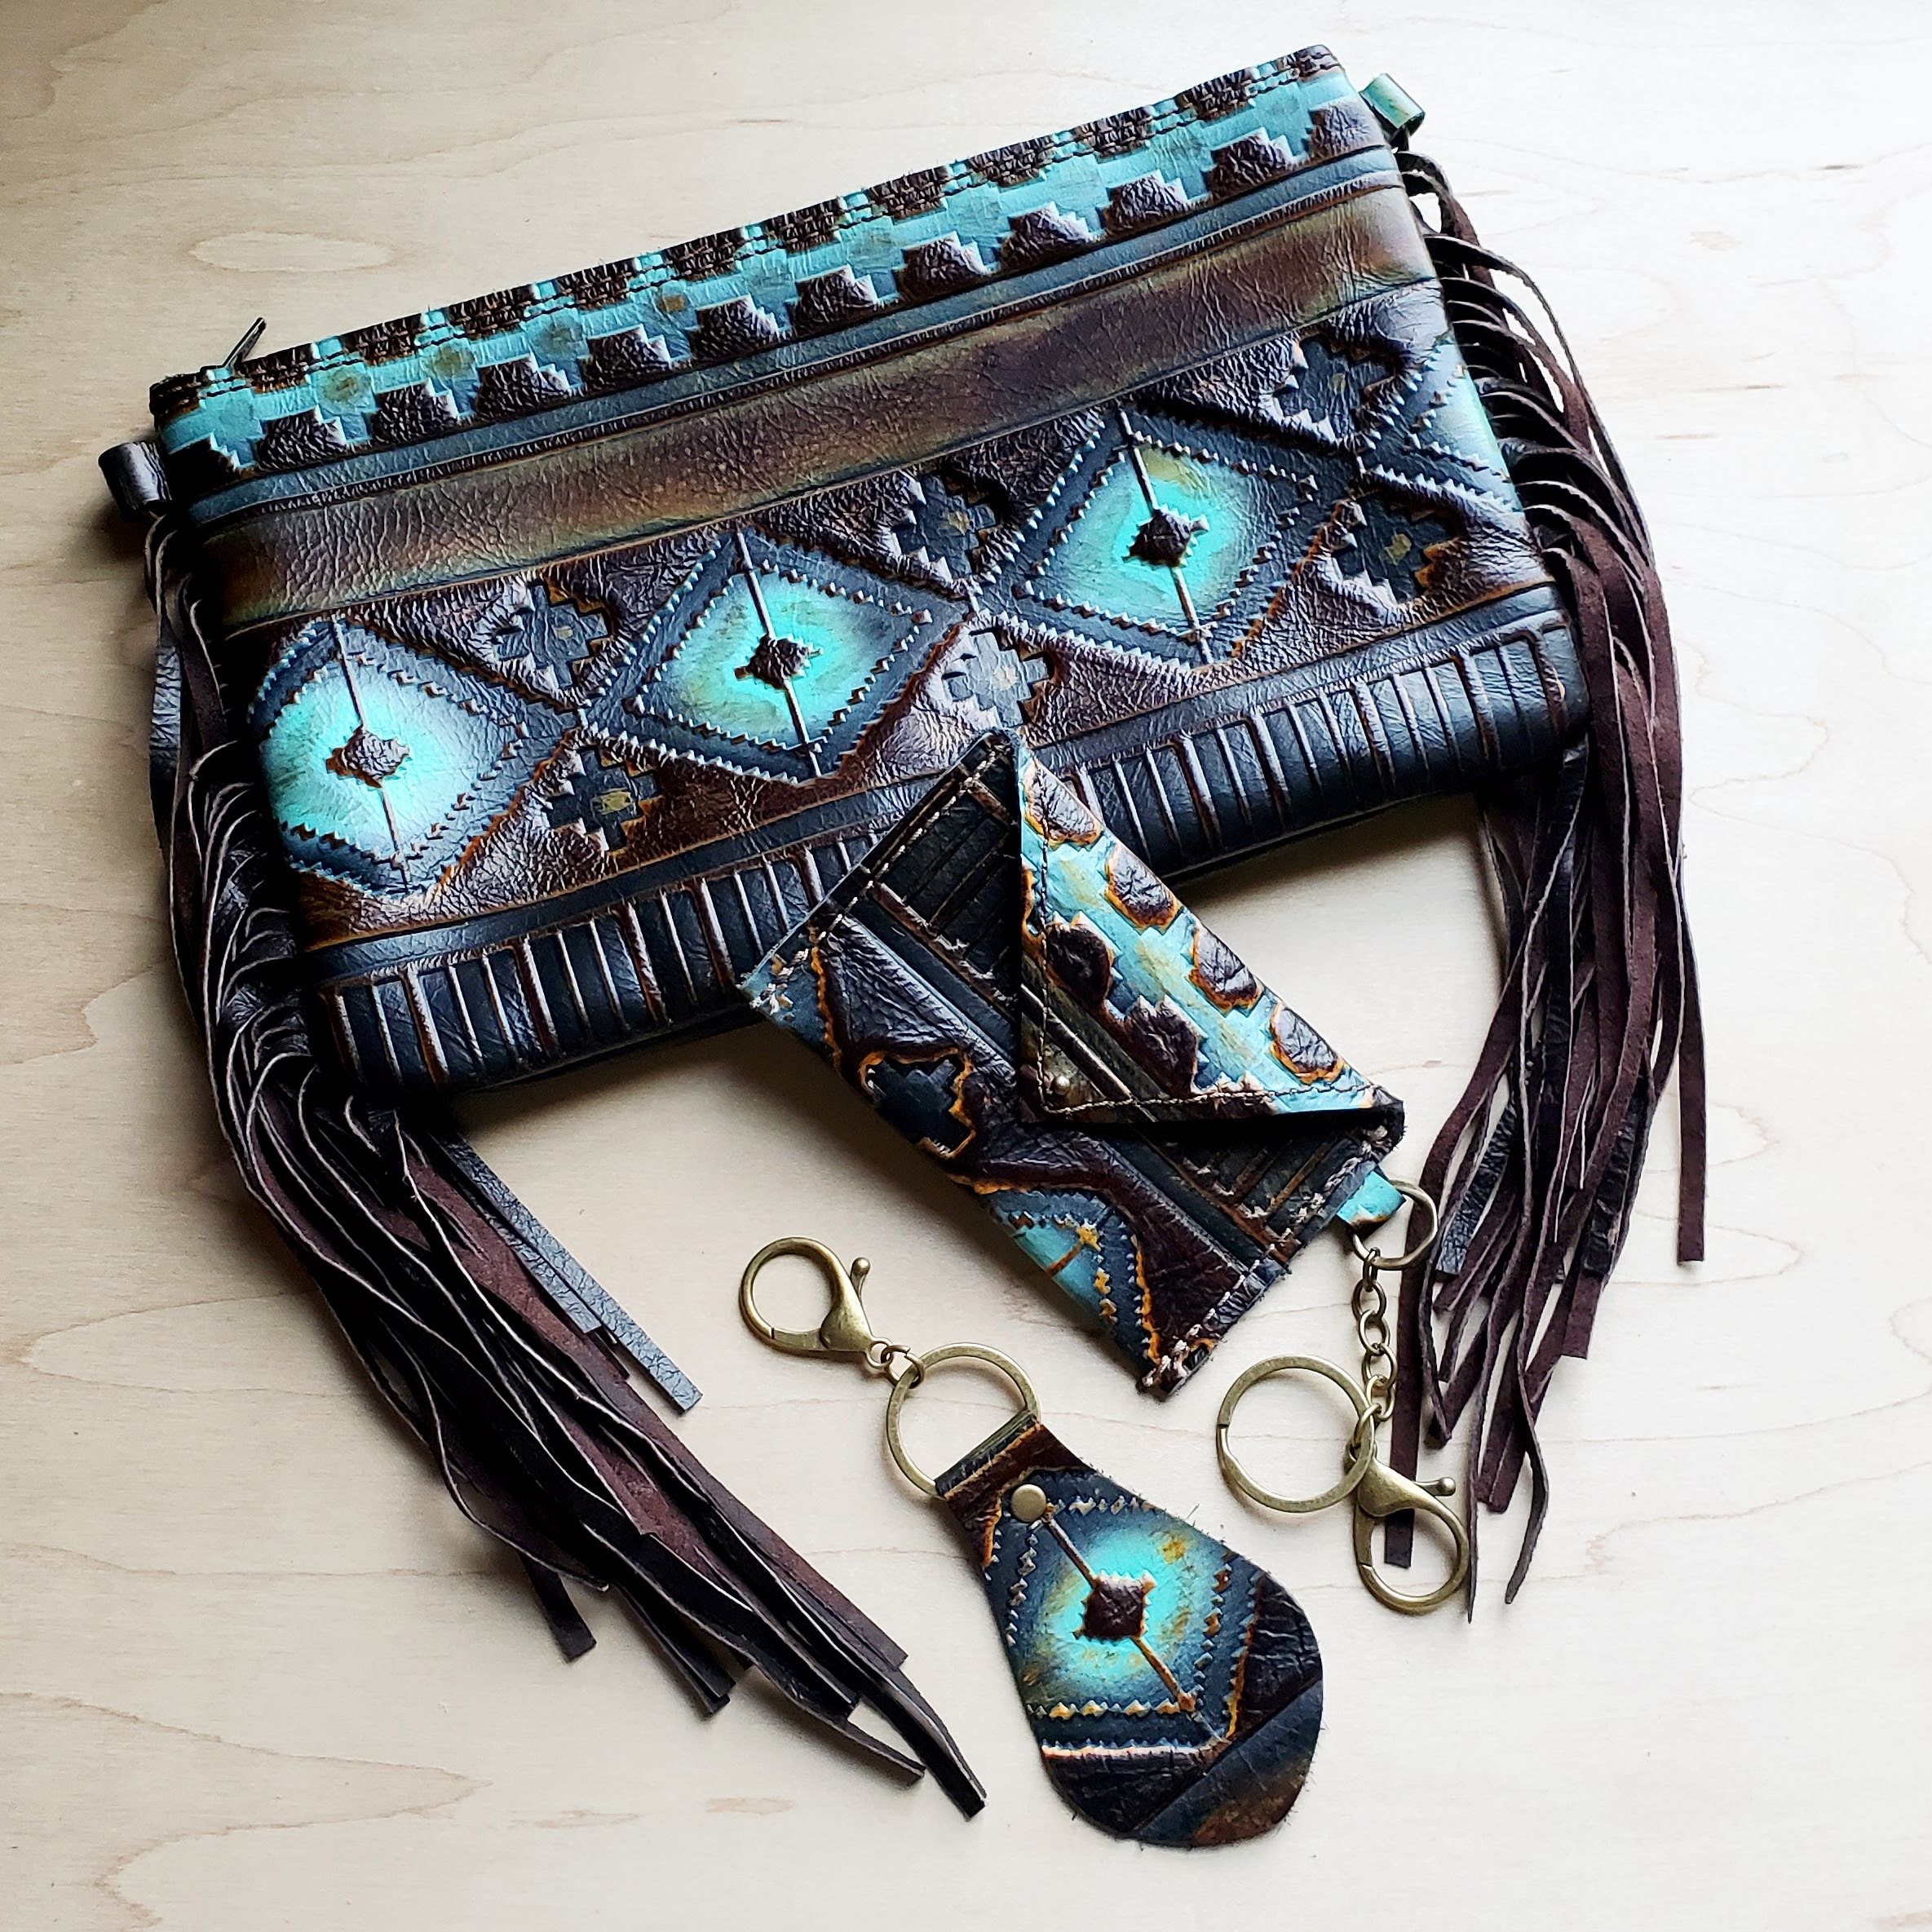 Feather Leather Handbag charm, painted art native southwestern leather bag  charm, boho feathers, painted resin horse charm